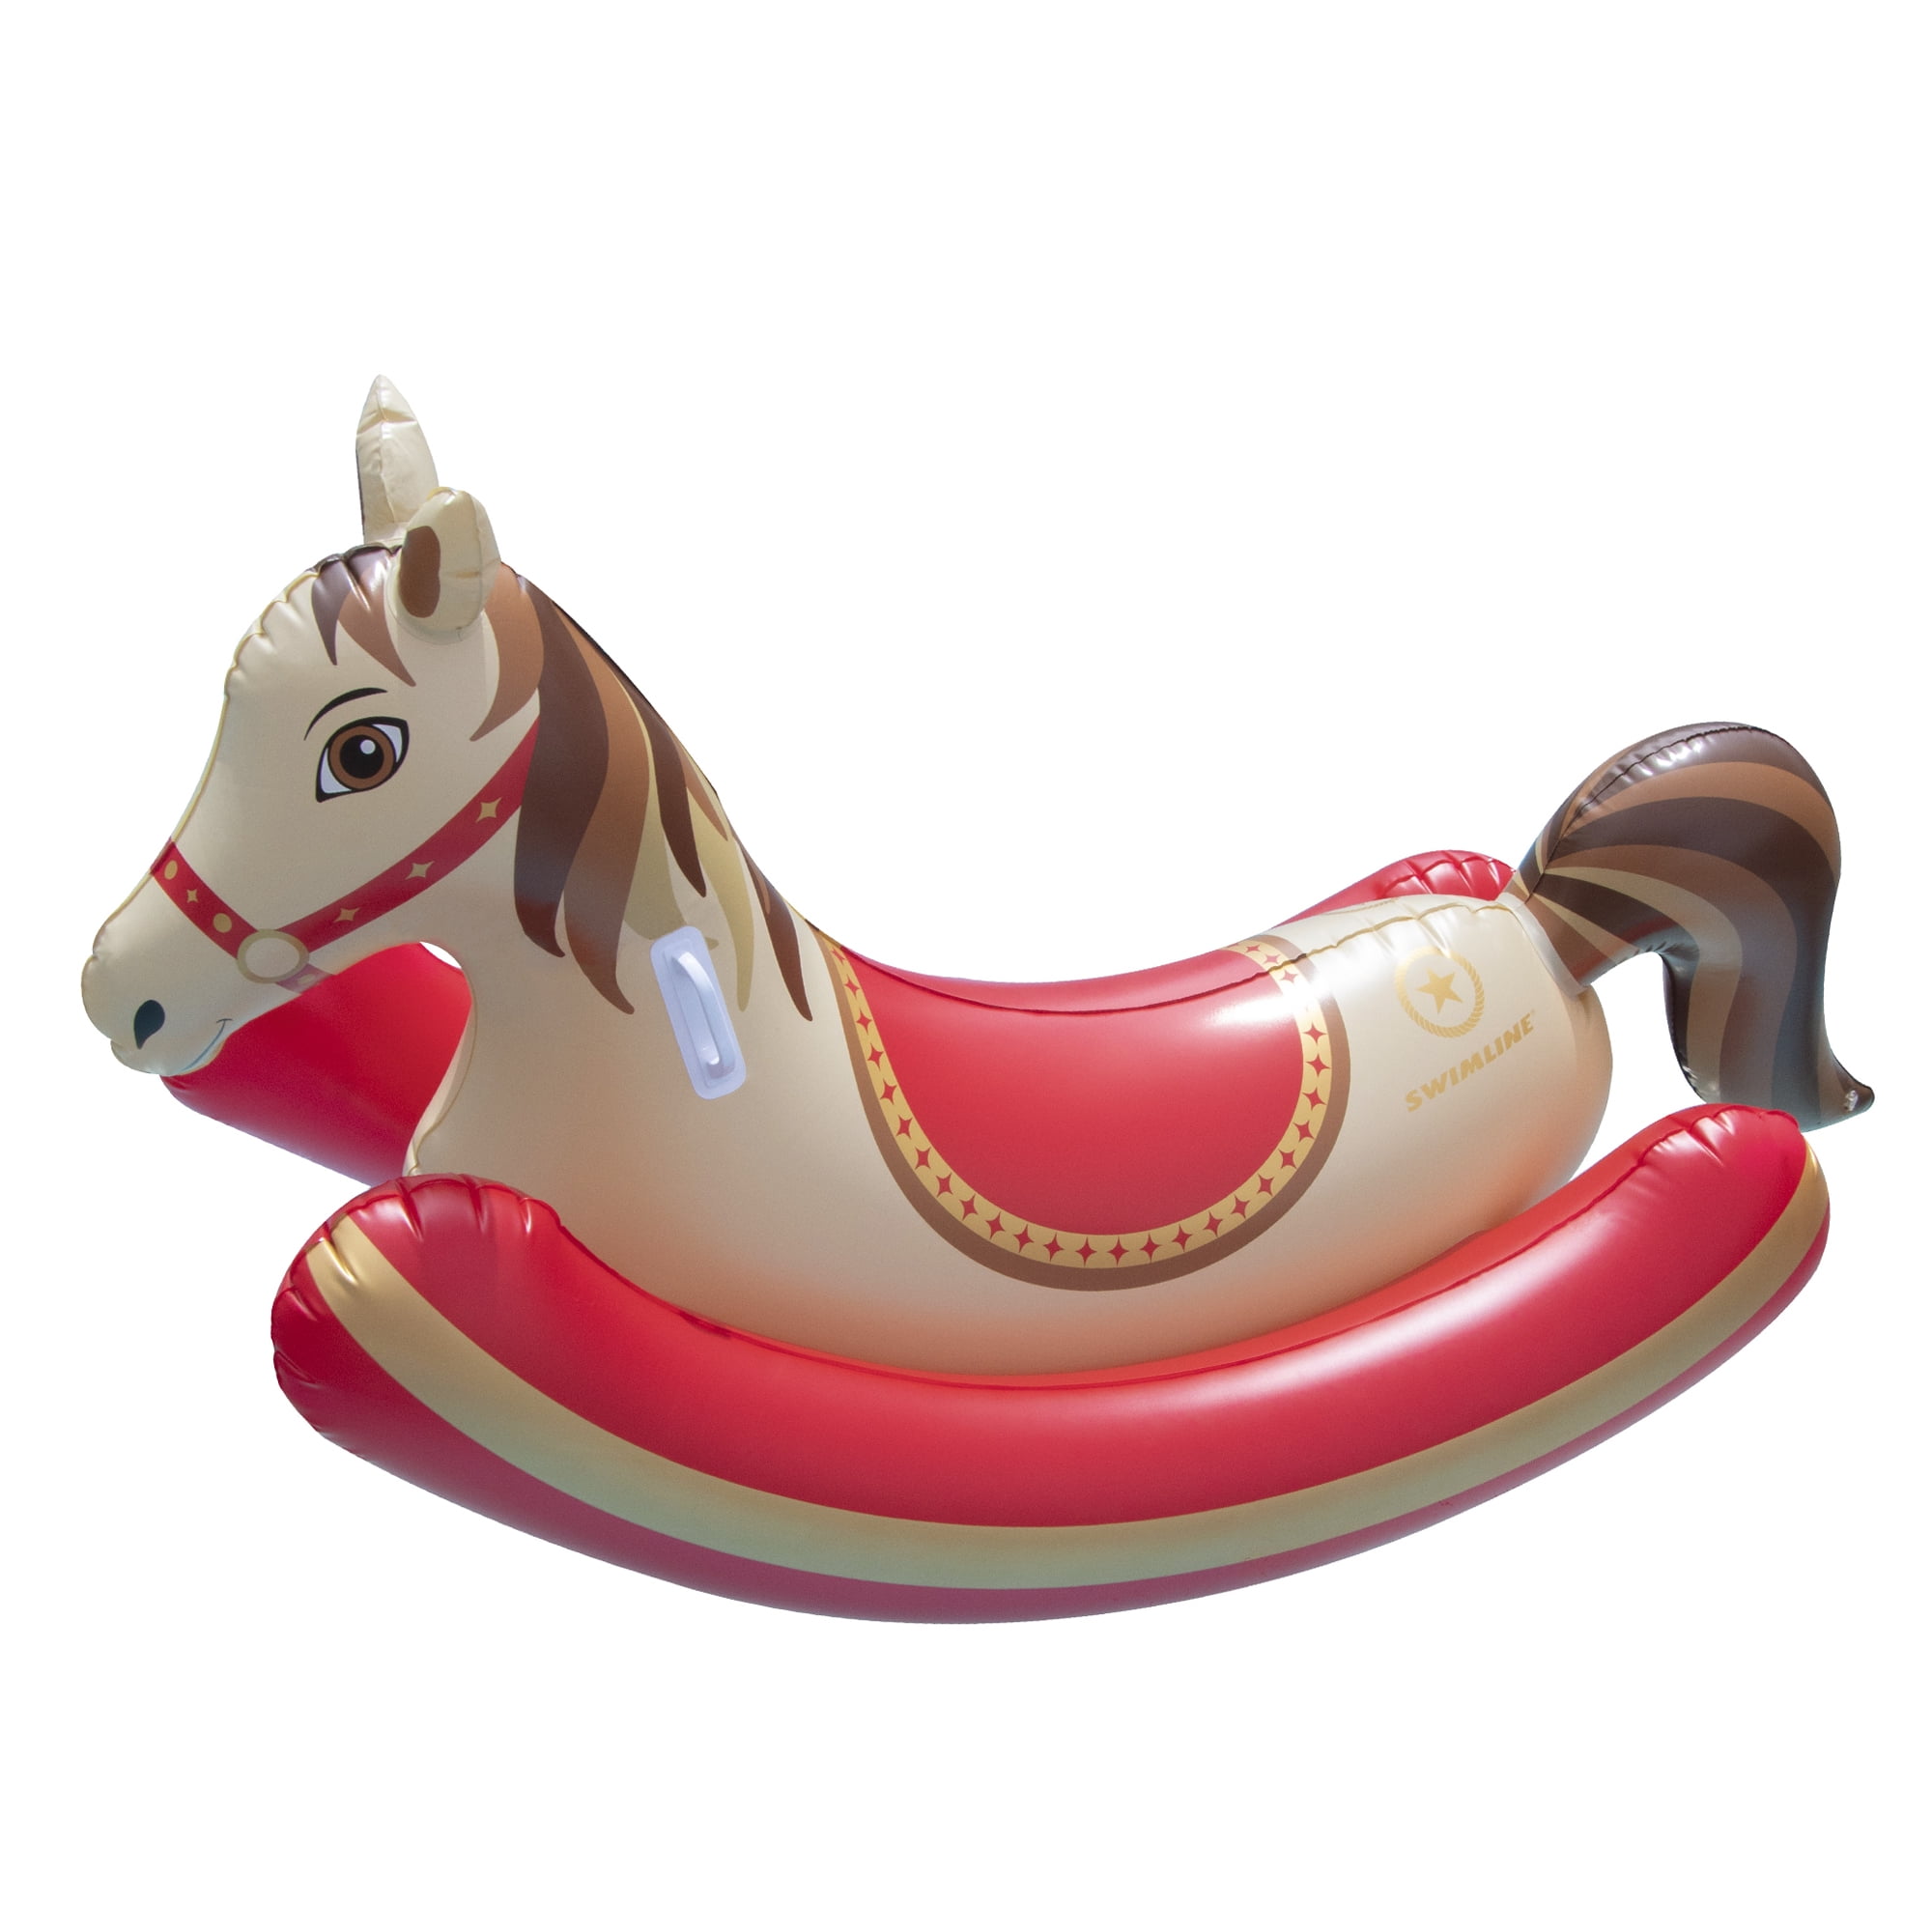 Hobby horse on stick Brown Hobby Horse with red halter Hobby horse for children 